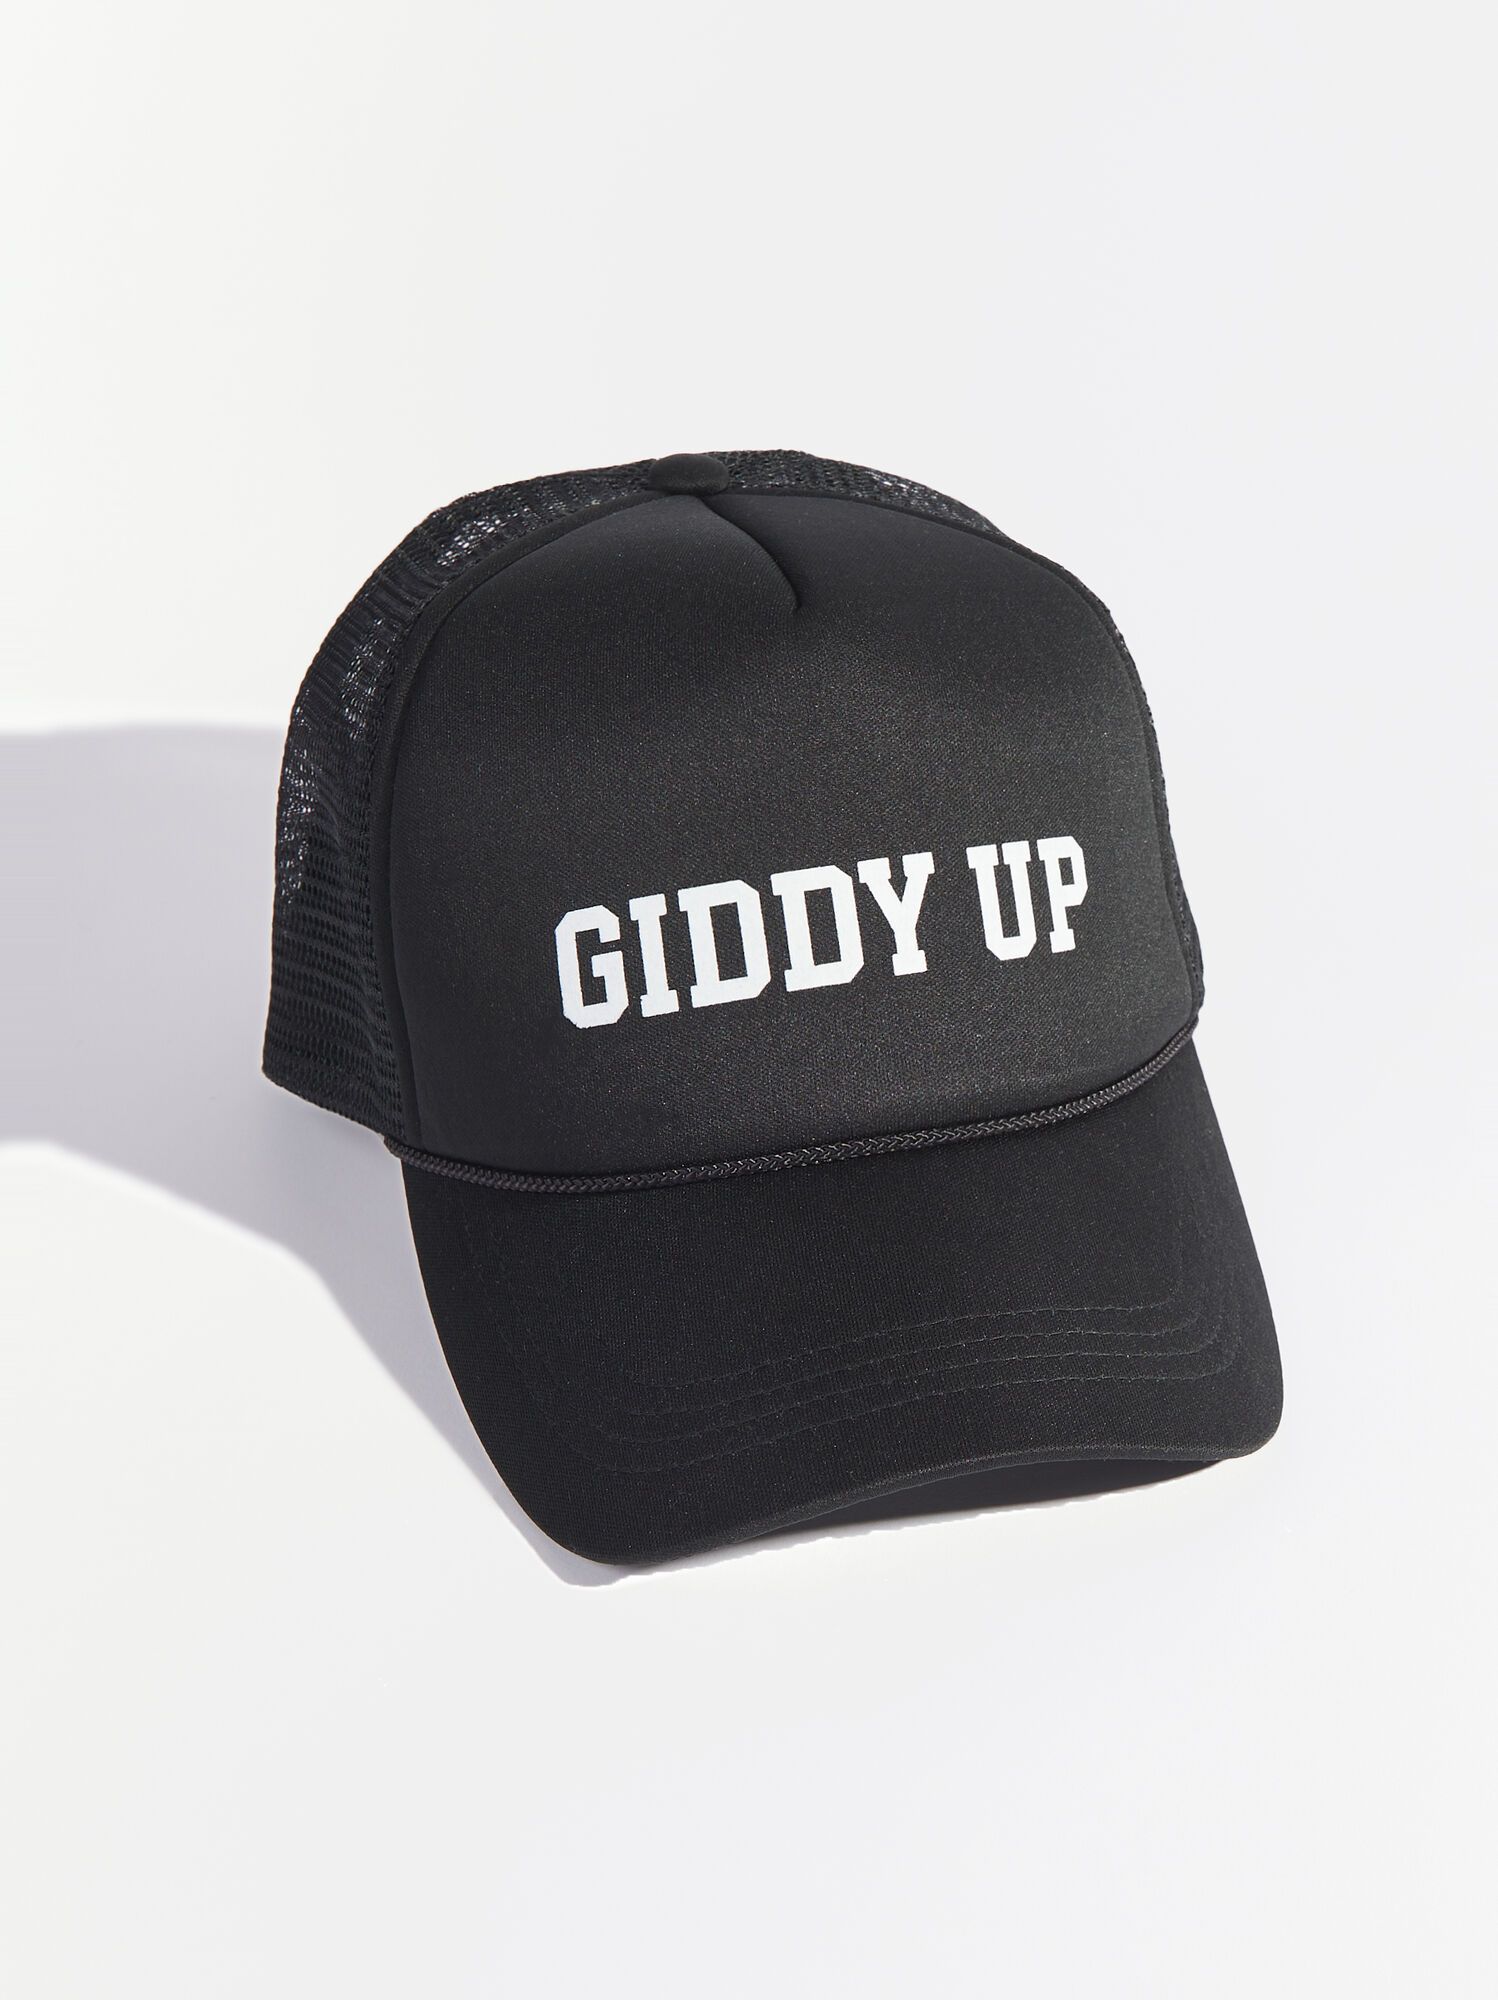 Giddy Up Trucker Hat | Altar'd State | Altar'd State